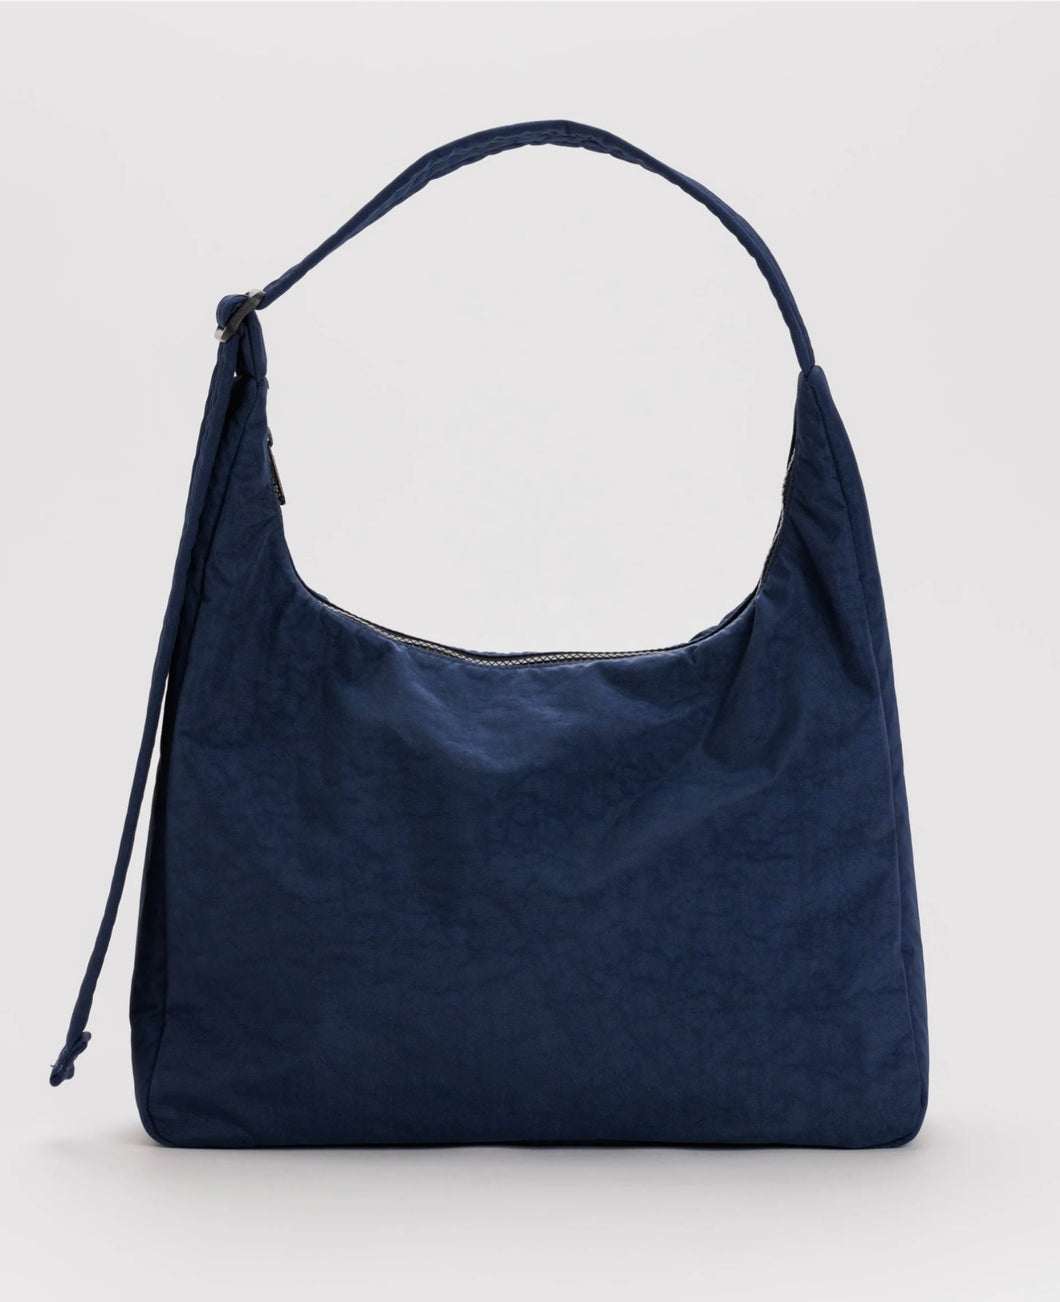 Baggu | Nylon Shoulder Bag in Navy - final sale